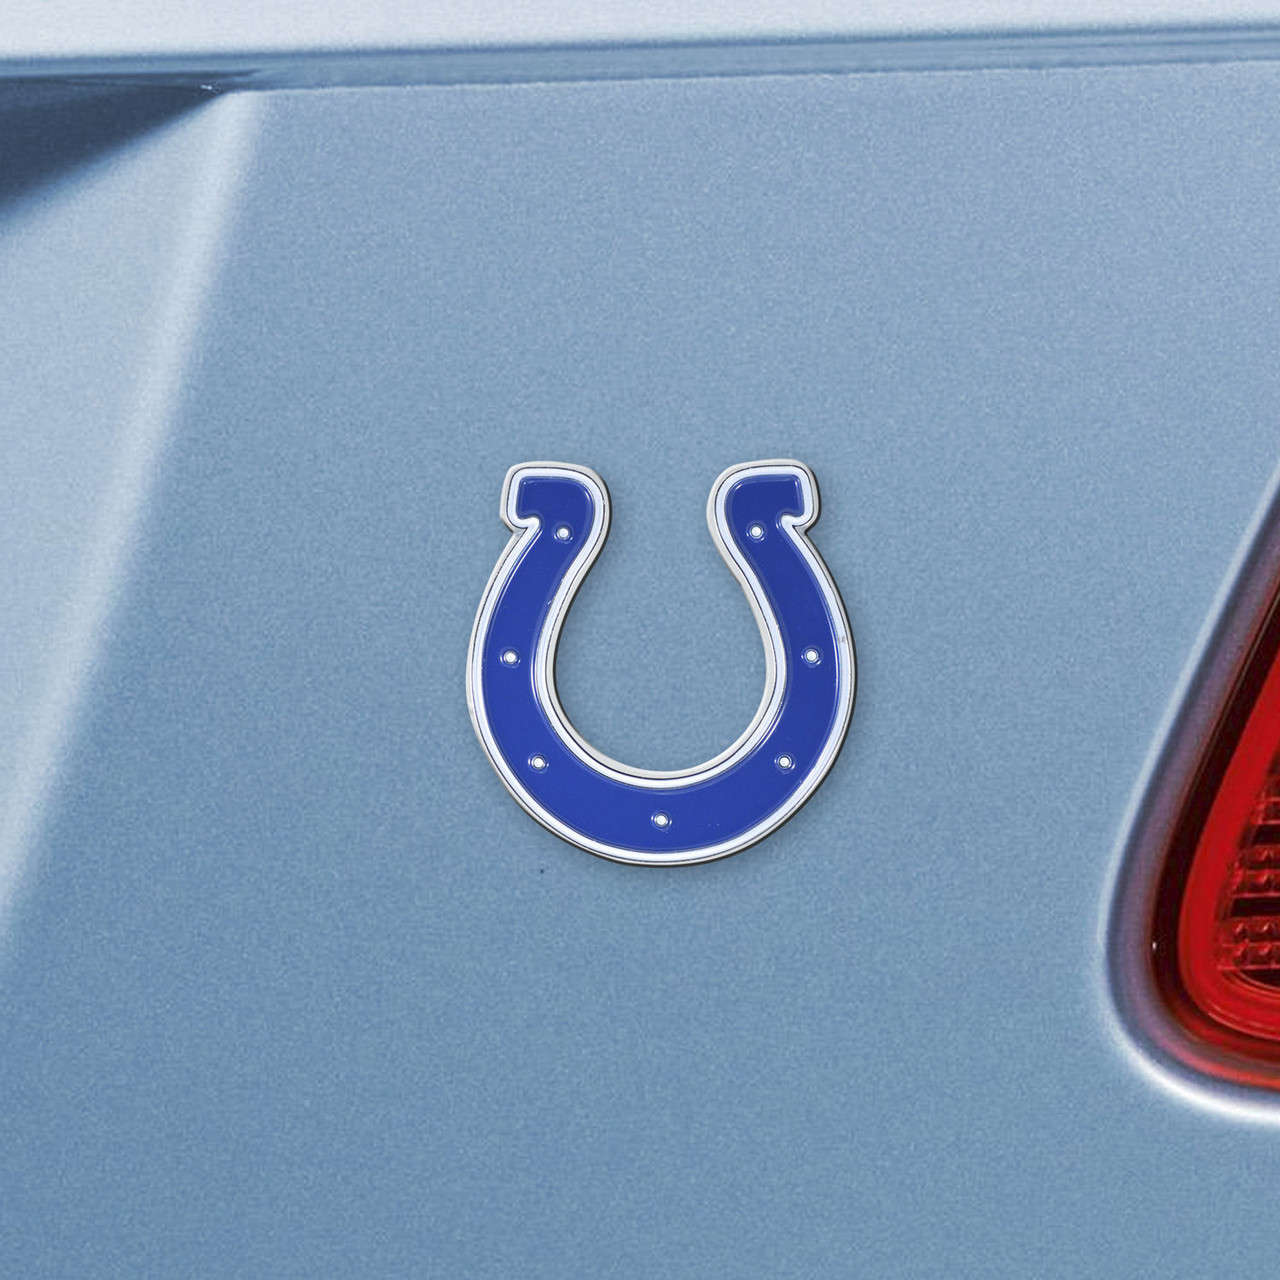 Indianapolis Colts Blue Emblem, Set of 2